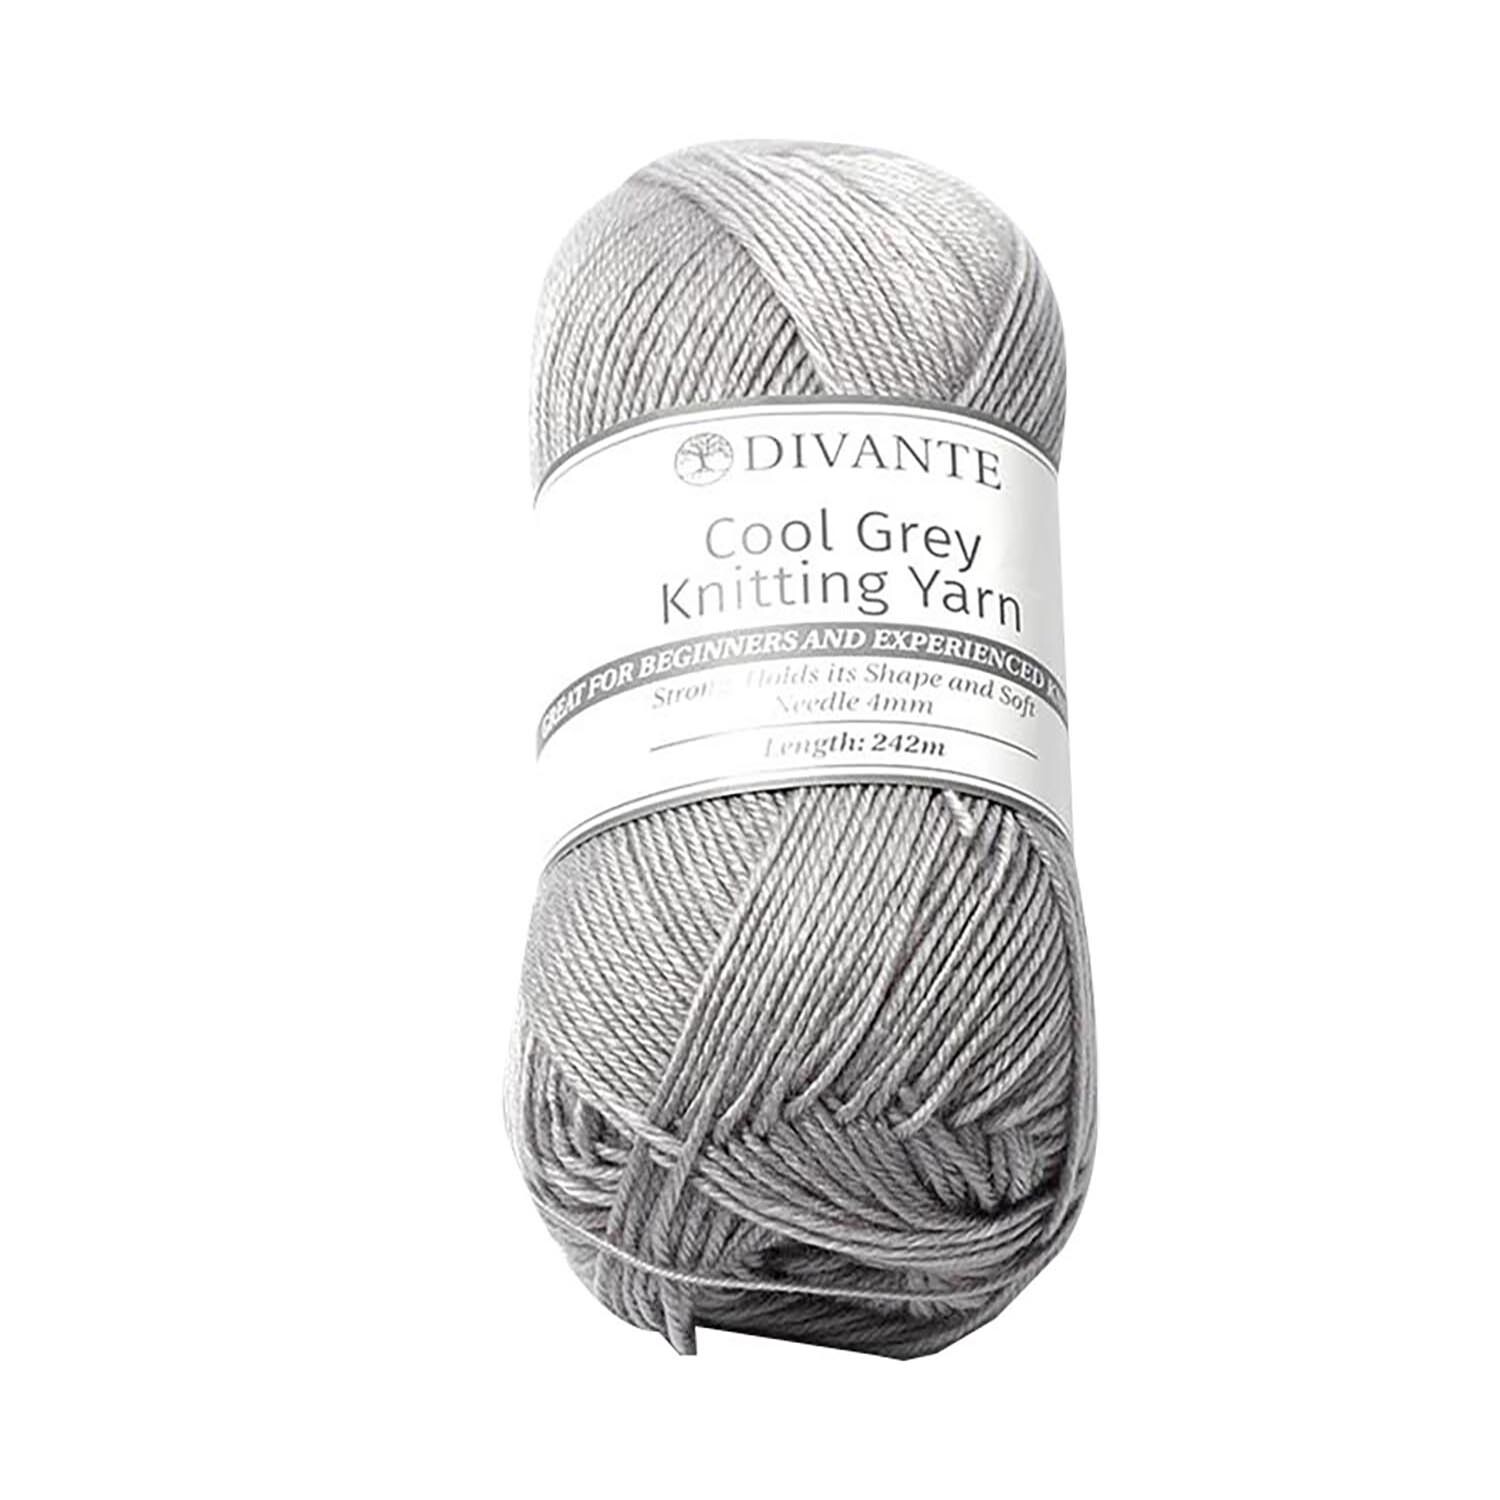 Divante Basic Knitting Yarn - Cool Grey Image